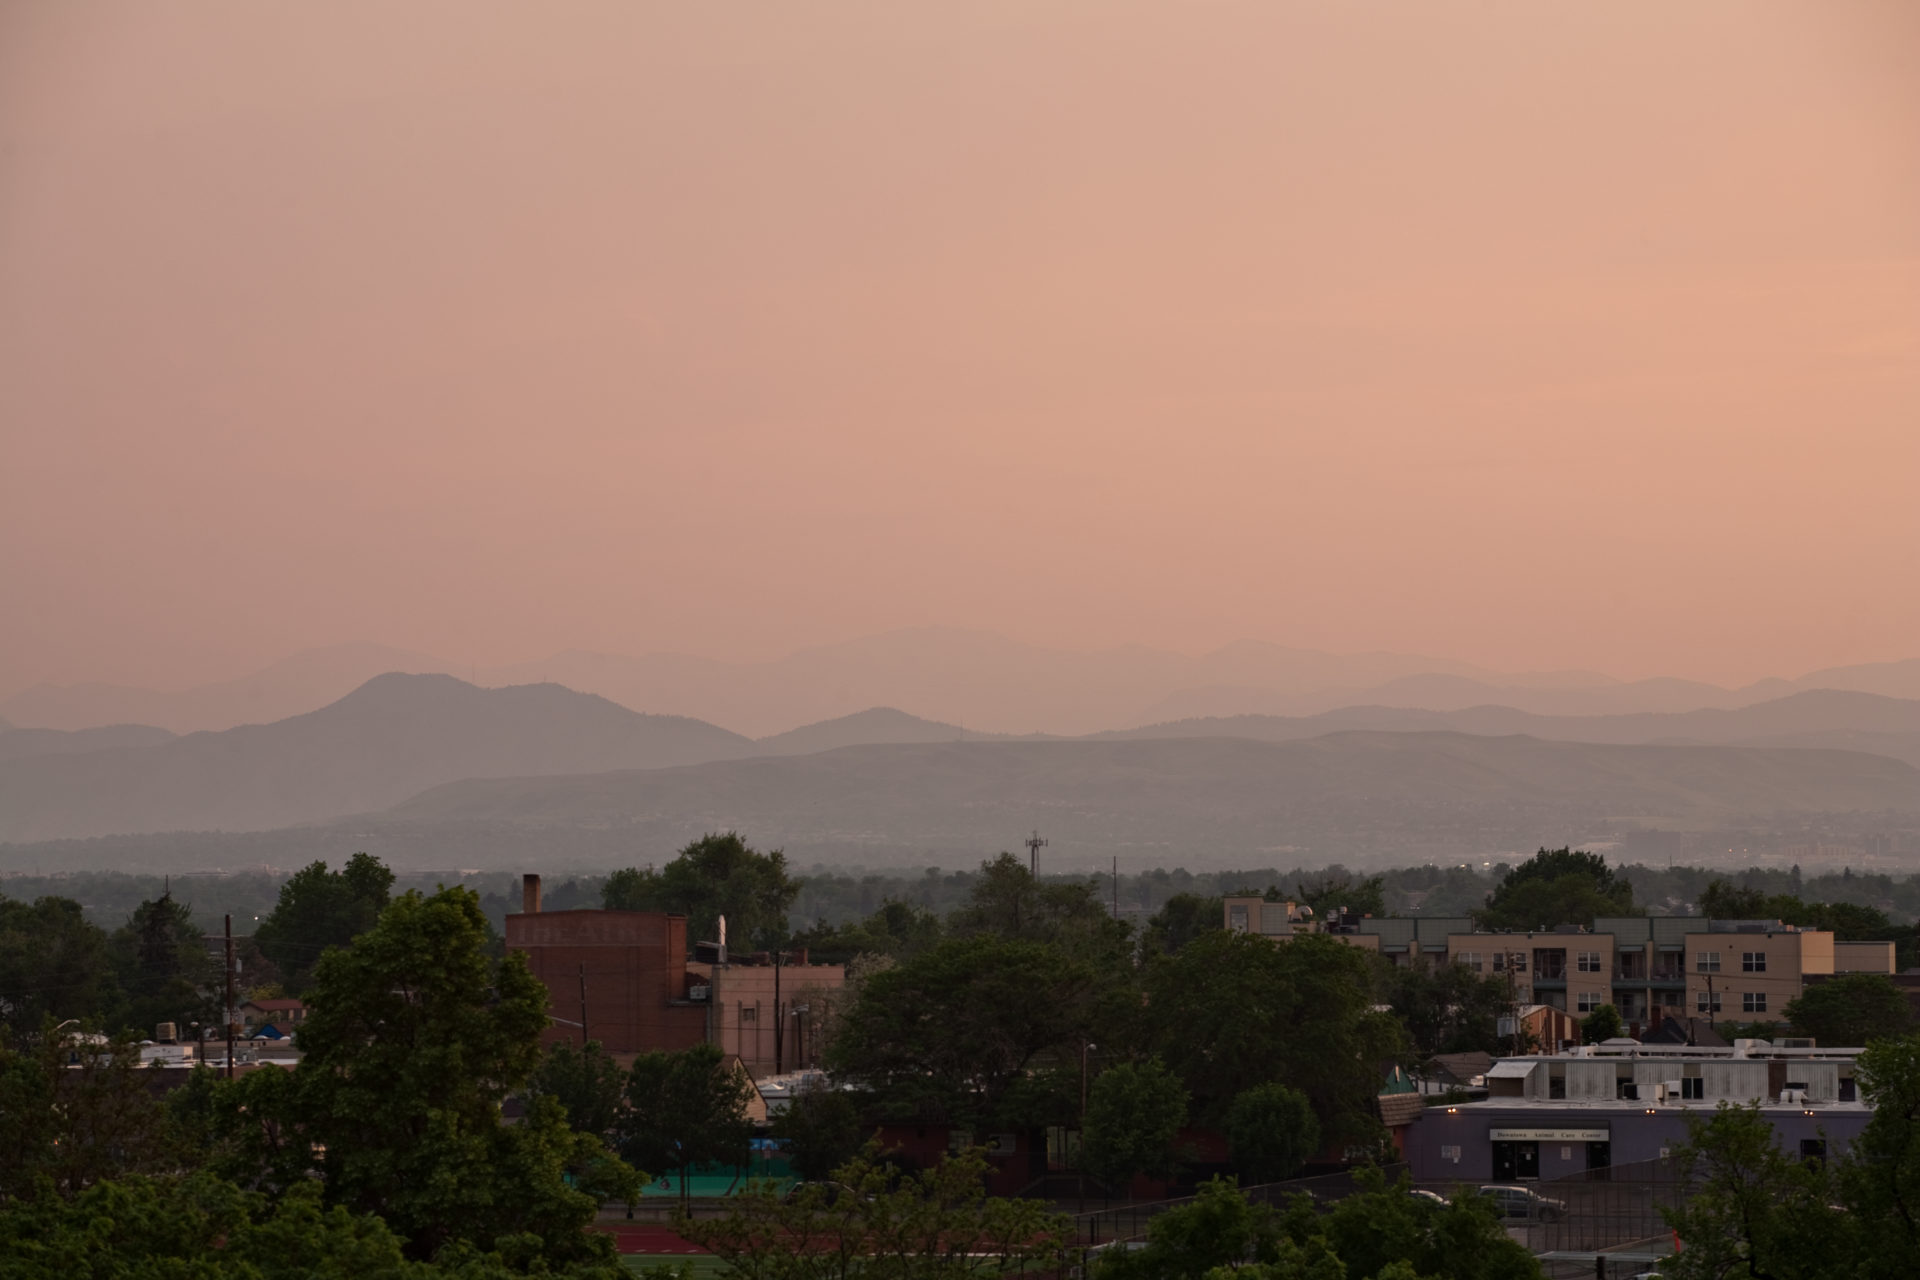 Mount Evans sunset - June 5, 2011